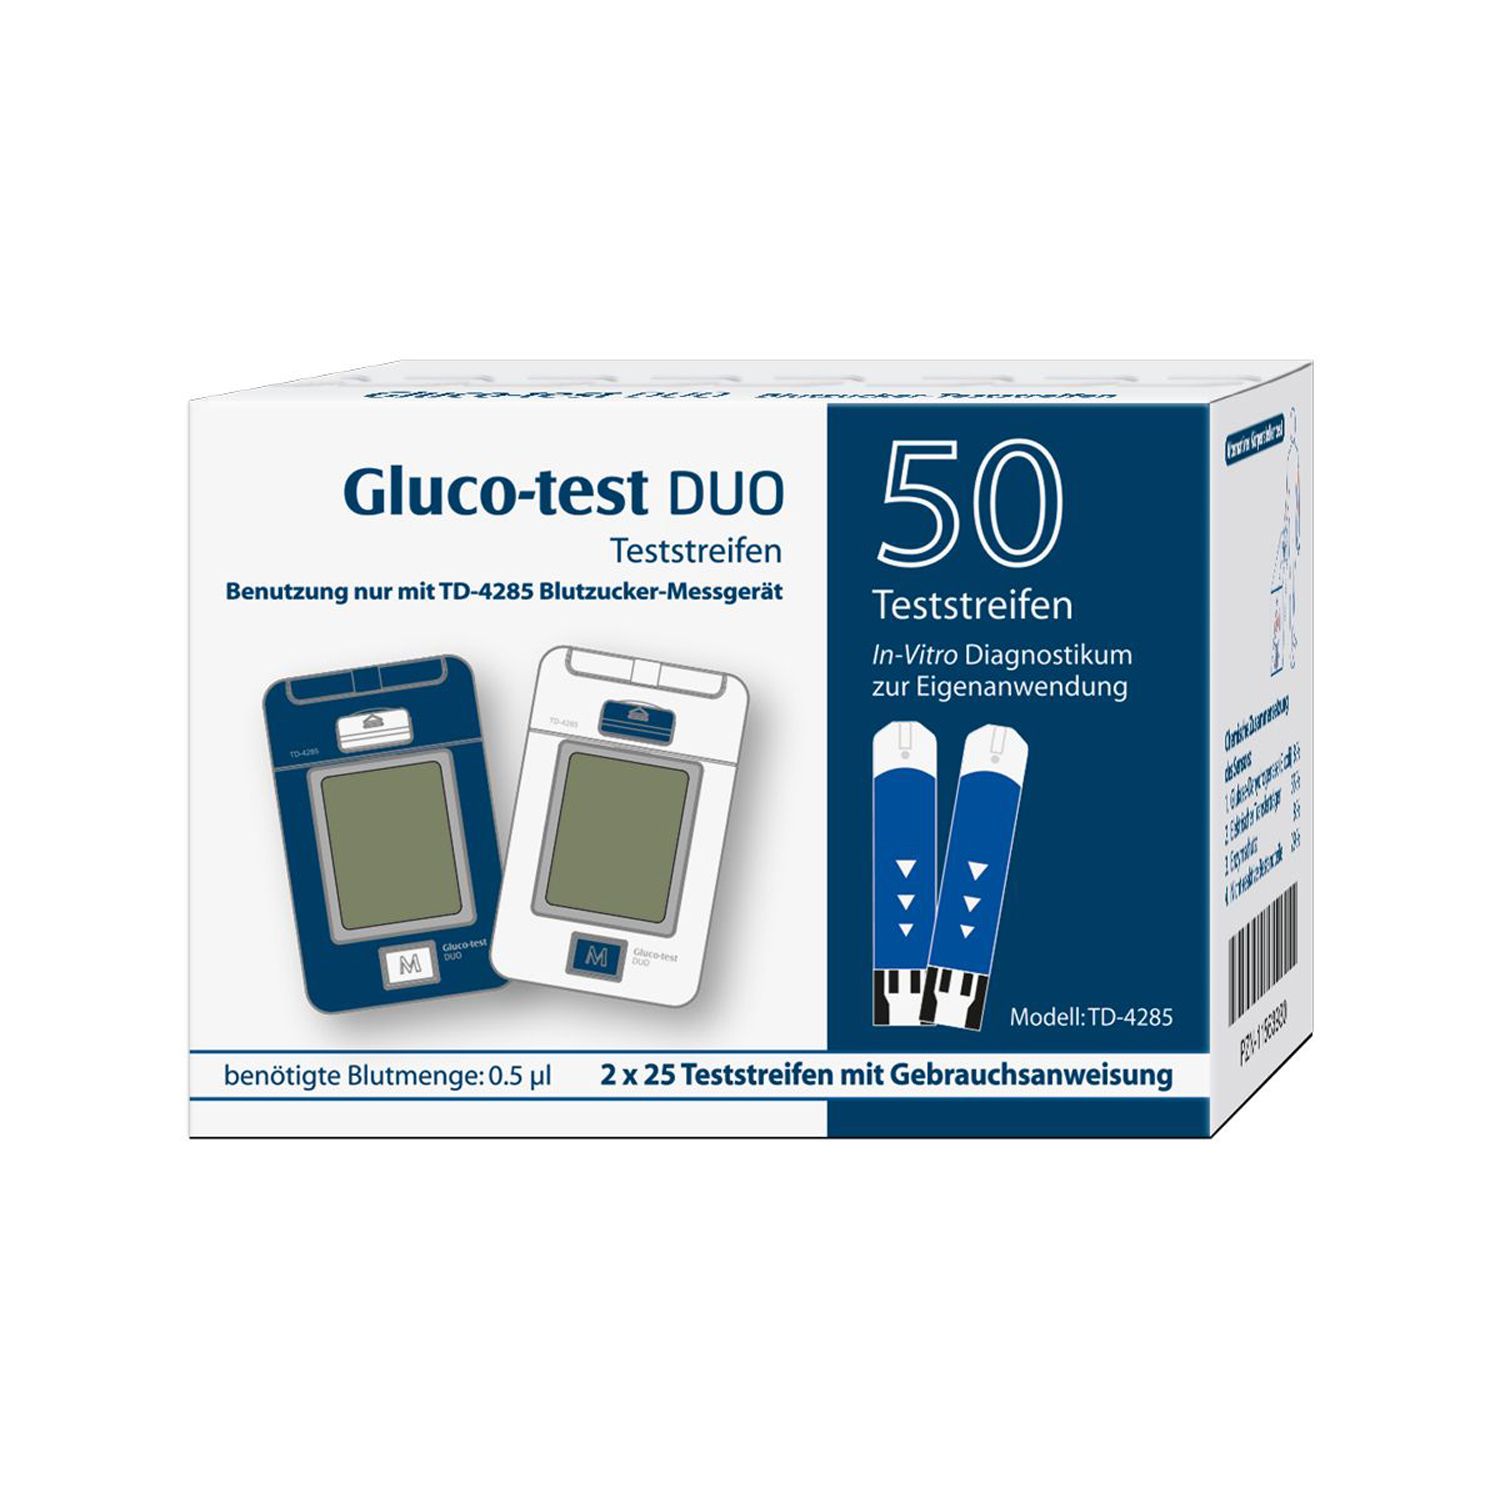 Gluco test duo test strips